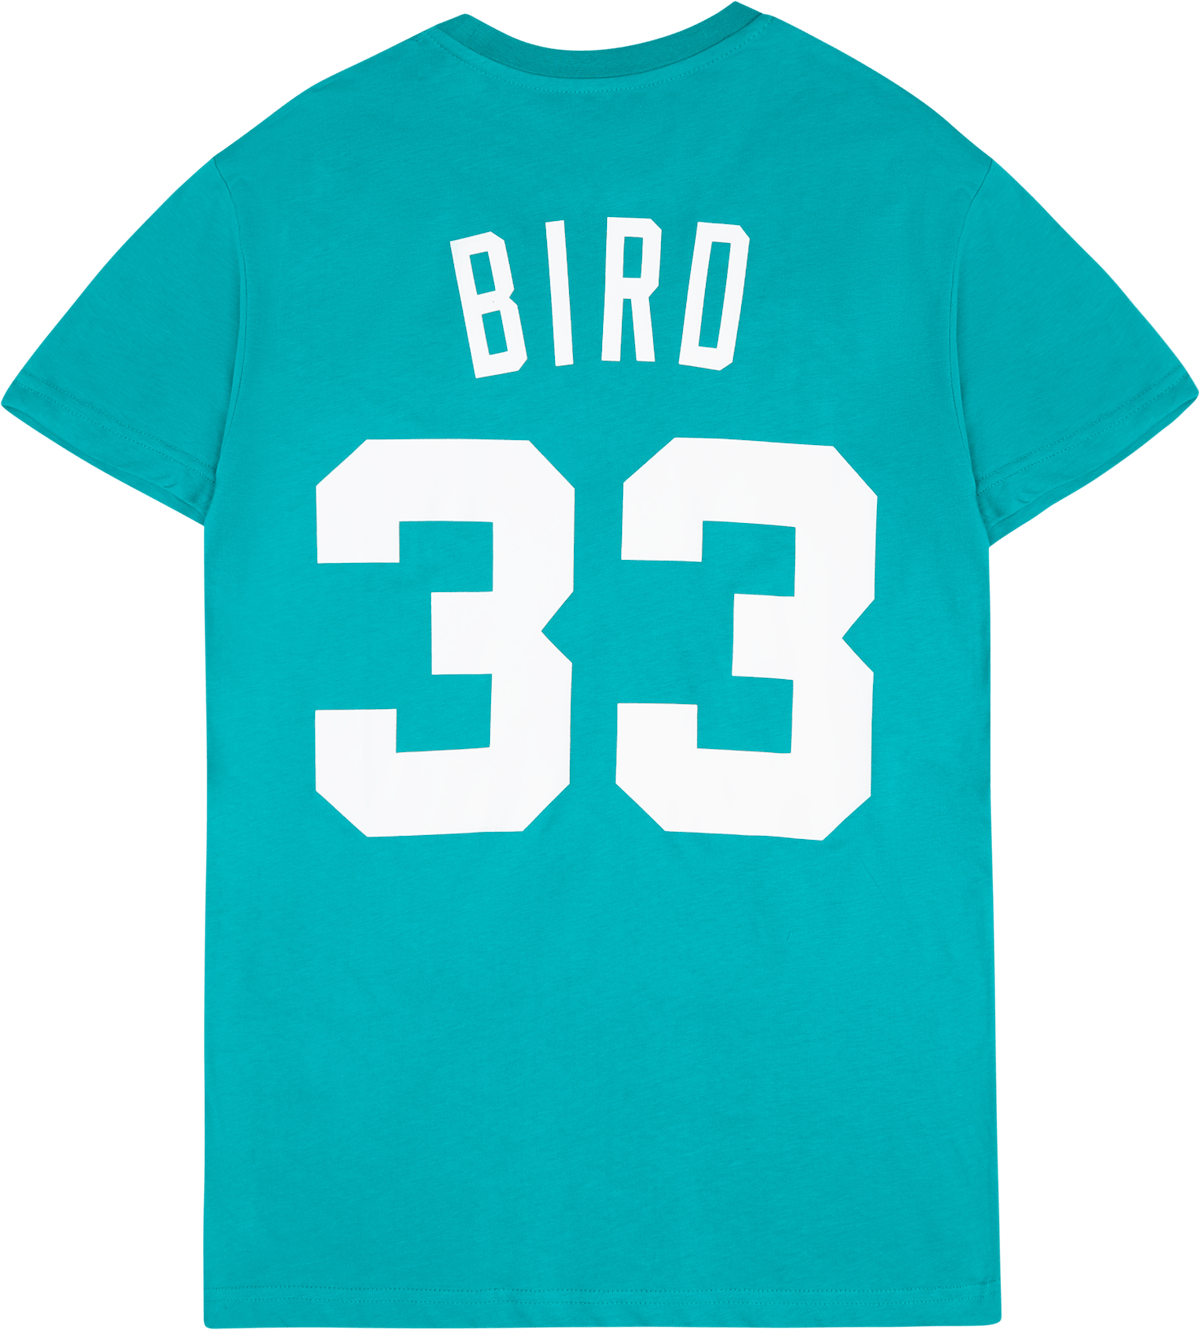 Name & Number Tee - Larry Bird